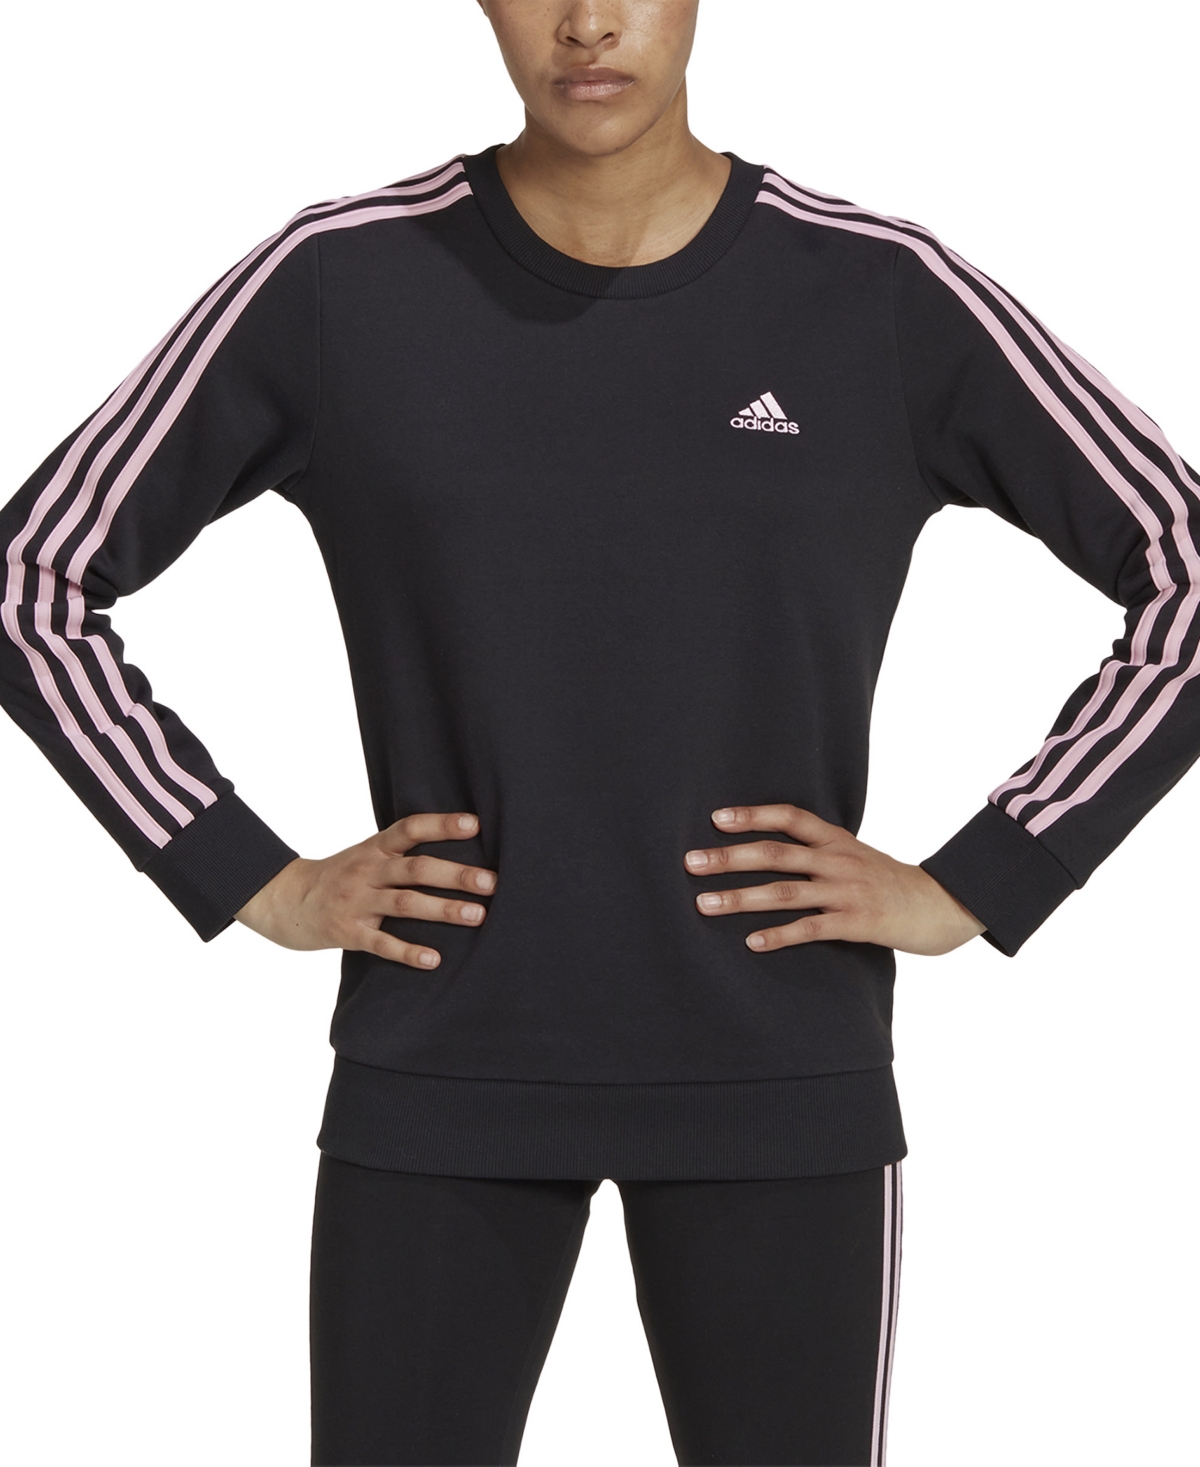  adidas Women's 3-Stripe Cotton Fleece Crewneck Sweatshirt